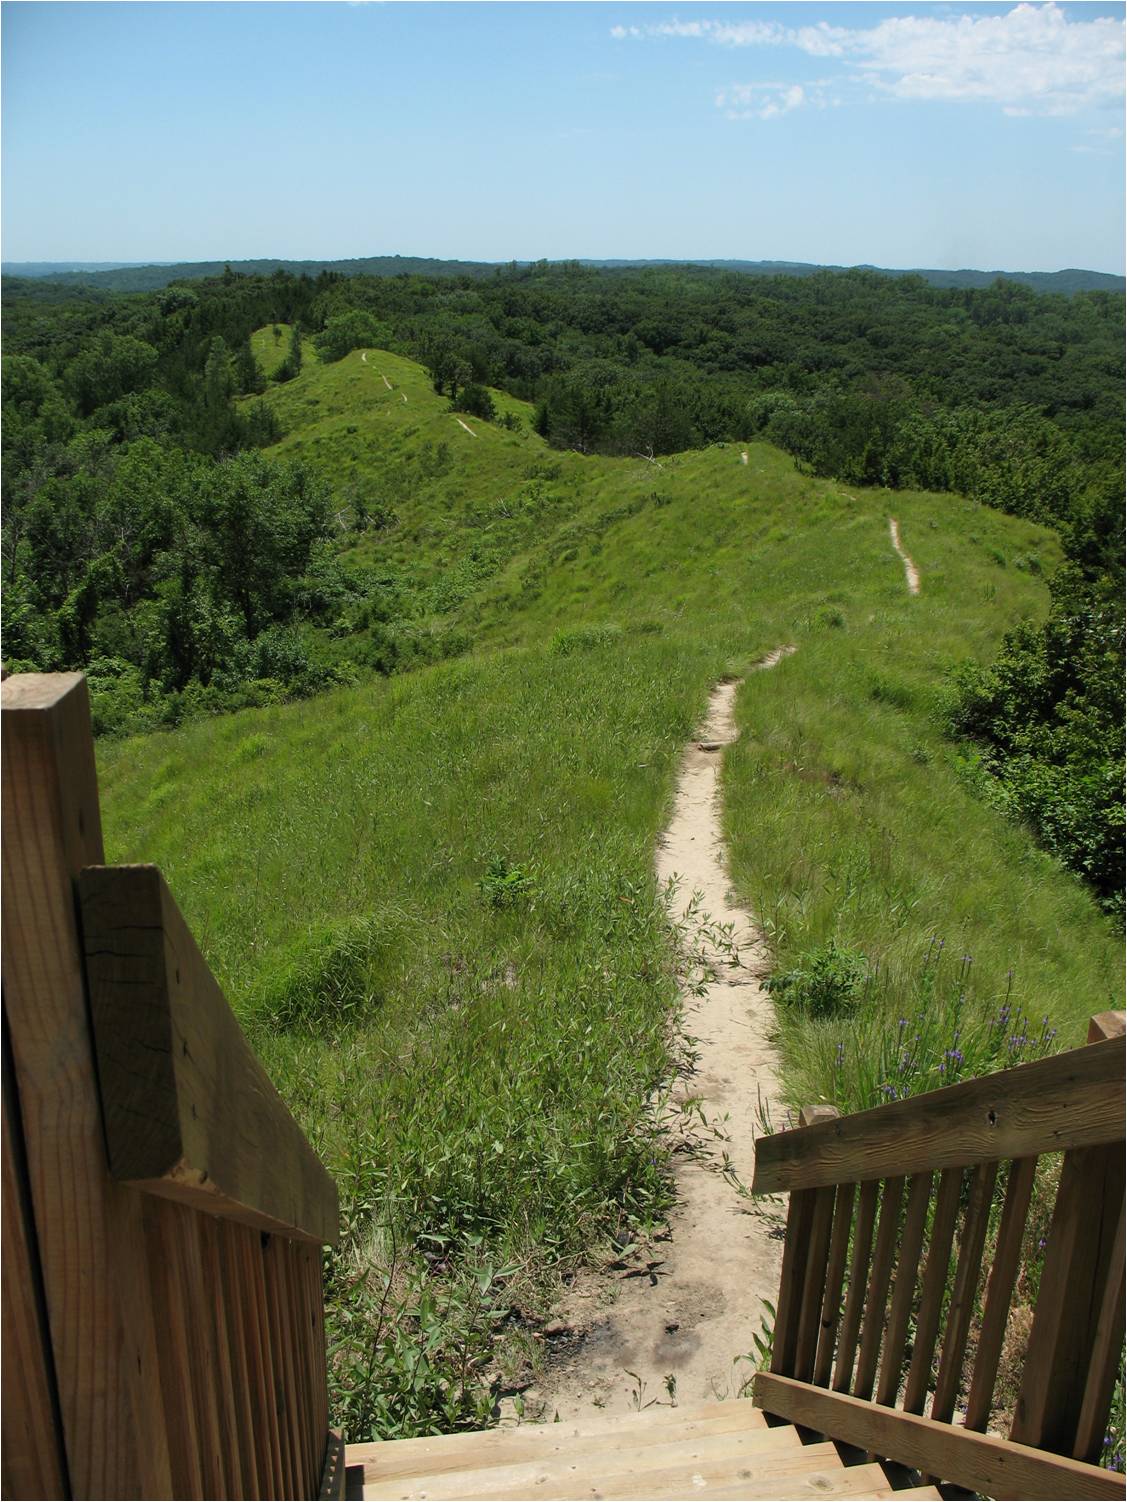 Photo of a hiking trail in western Iowa.